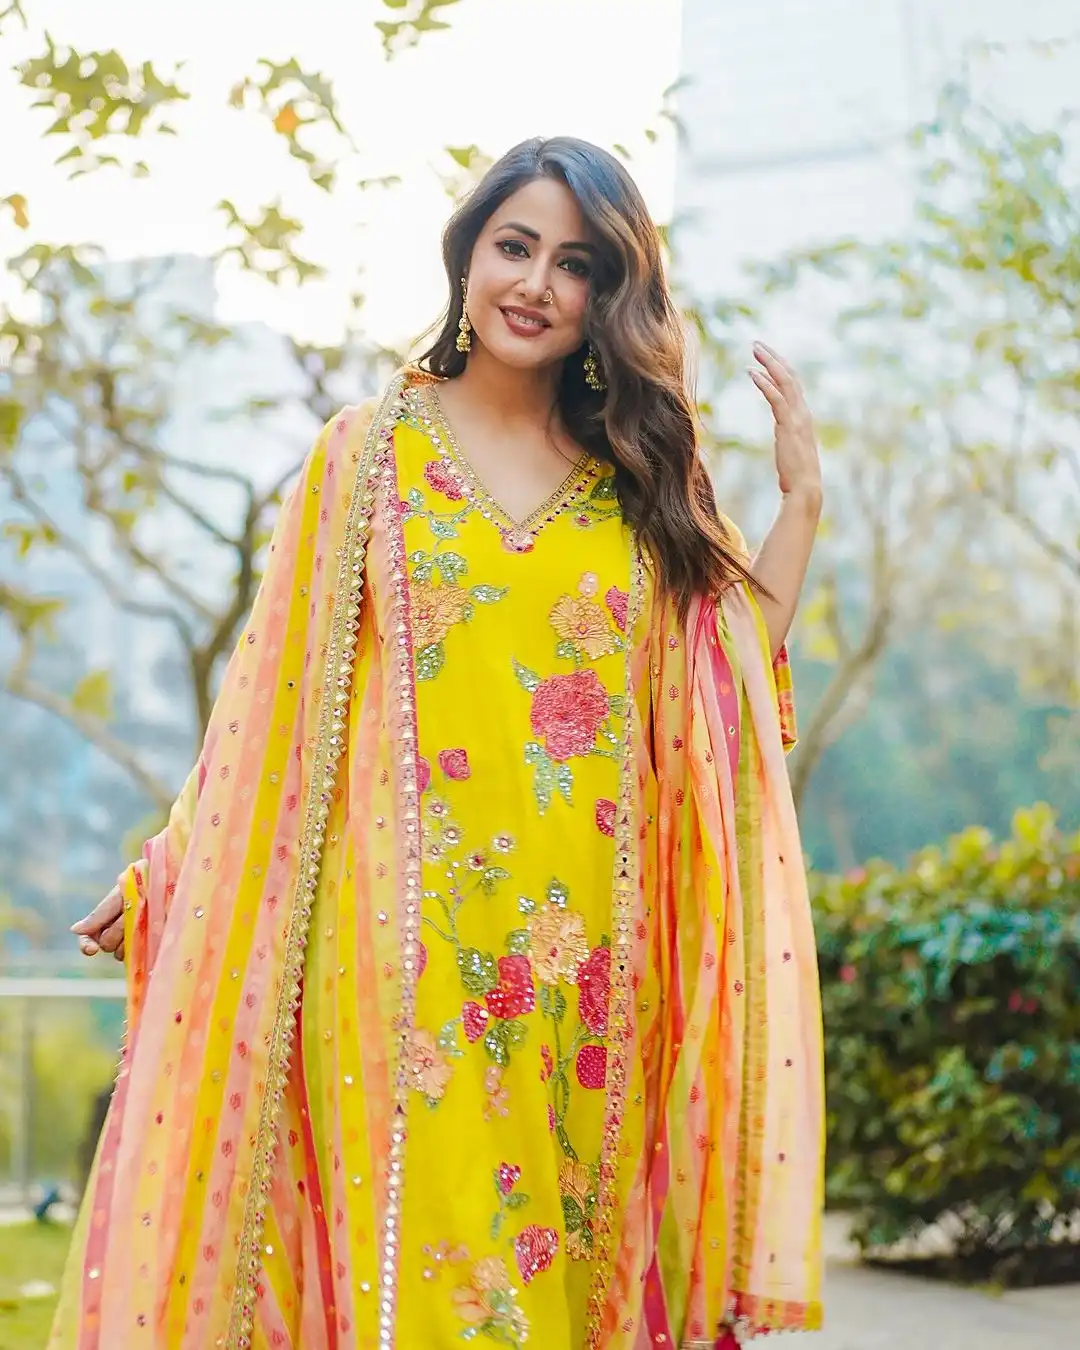 Hina Khan Traditional Look